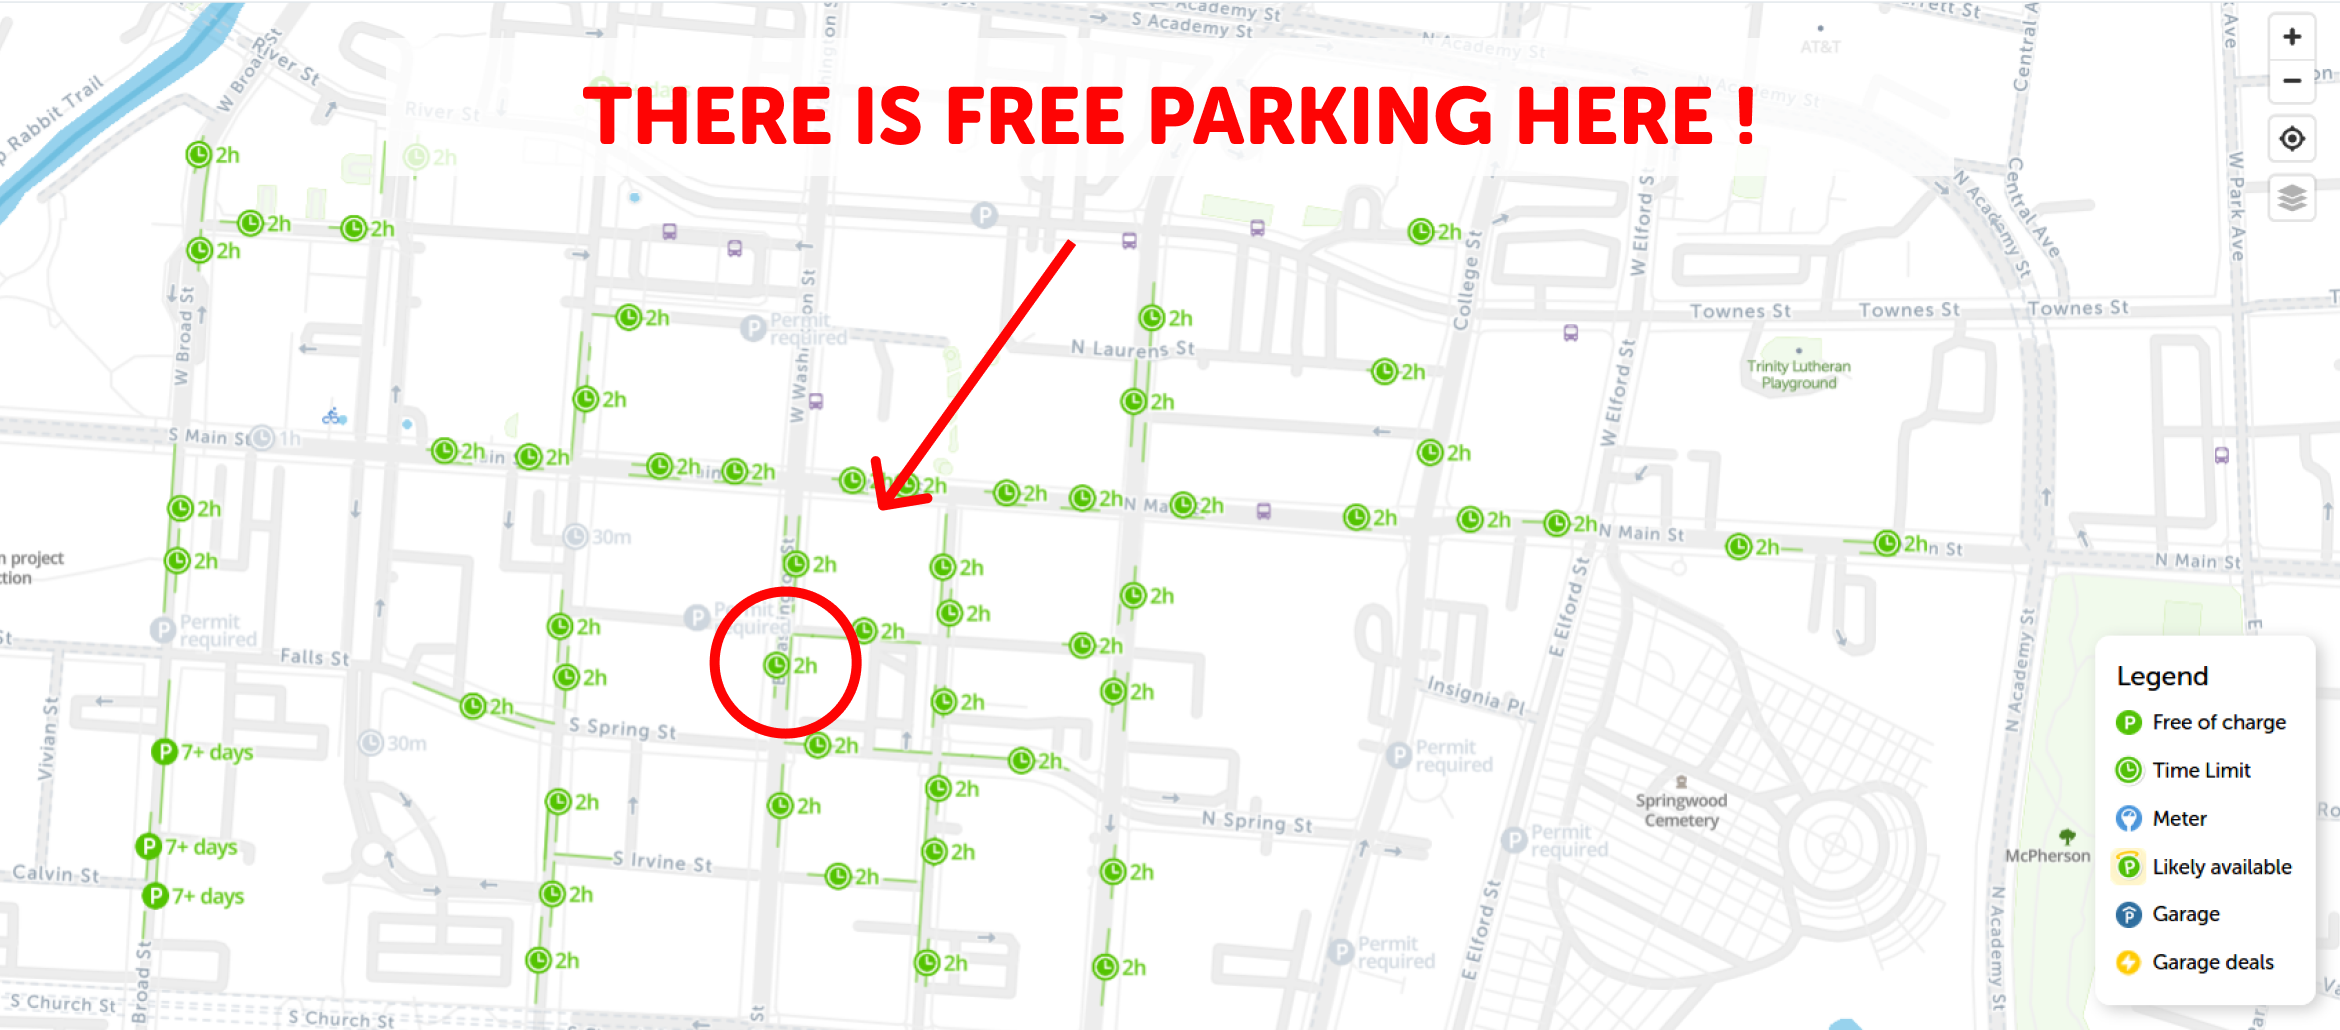 map of free parking in Greenville - SpotAngels